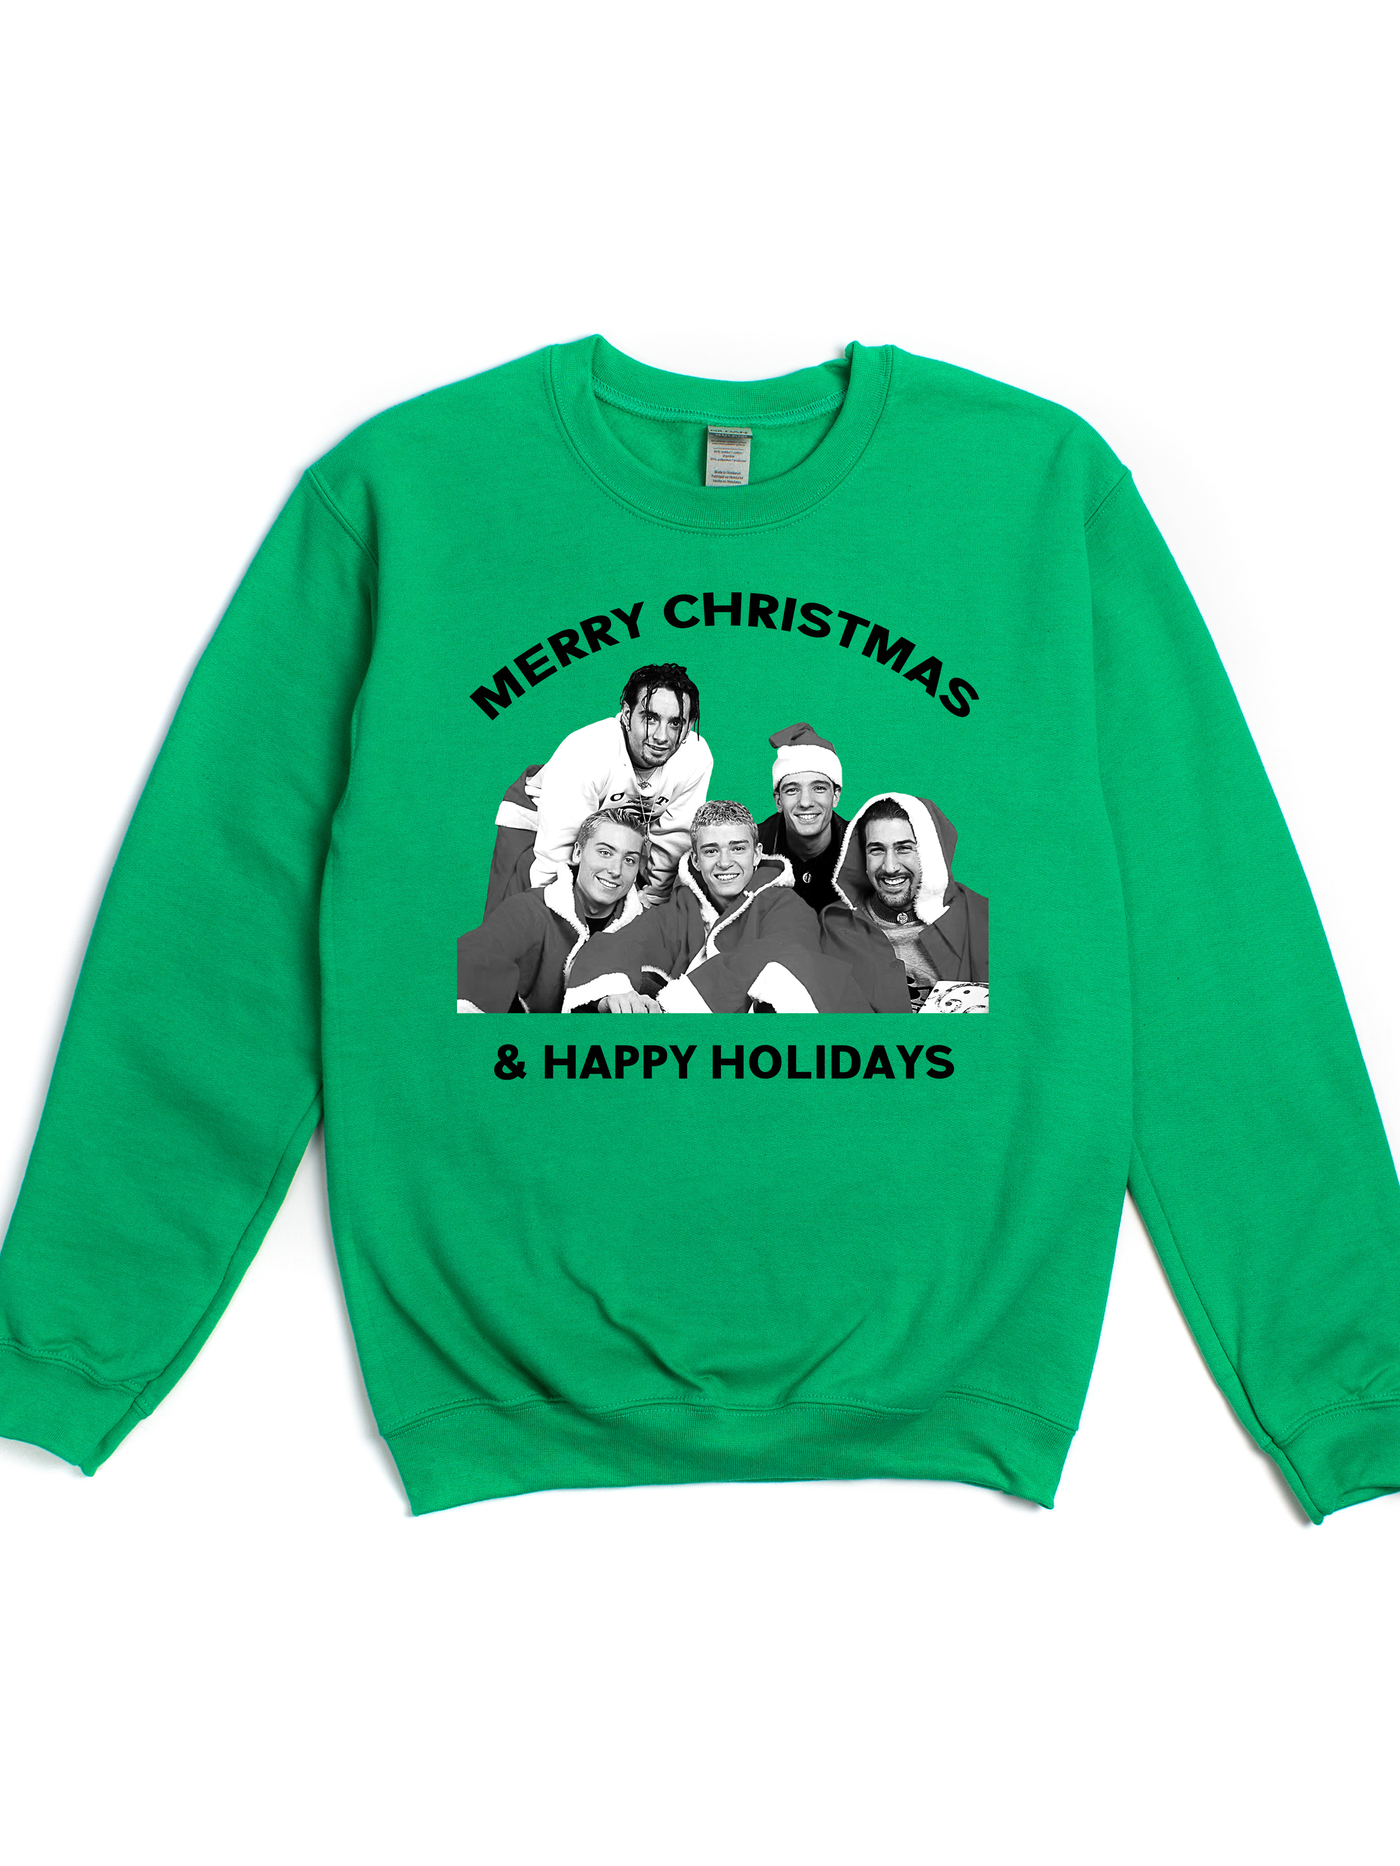 Merry Christmas & Happy Holidays Tee/Sweatshirt